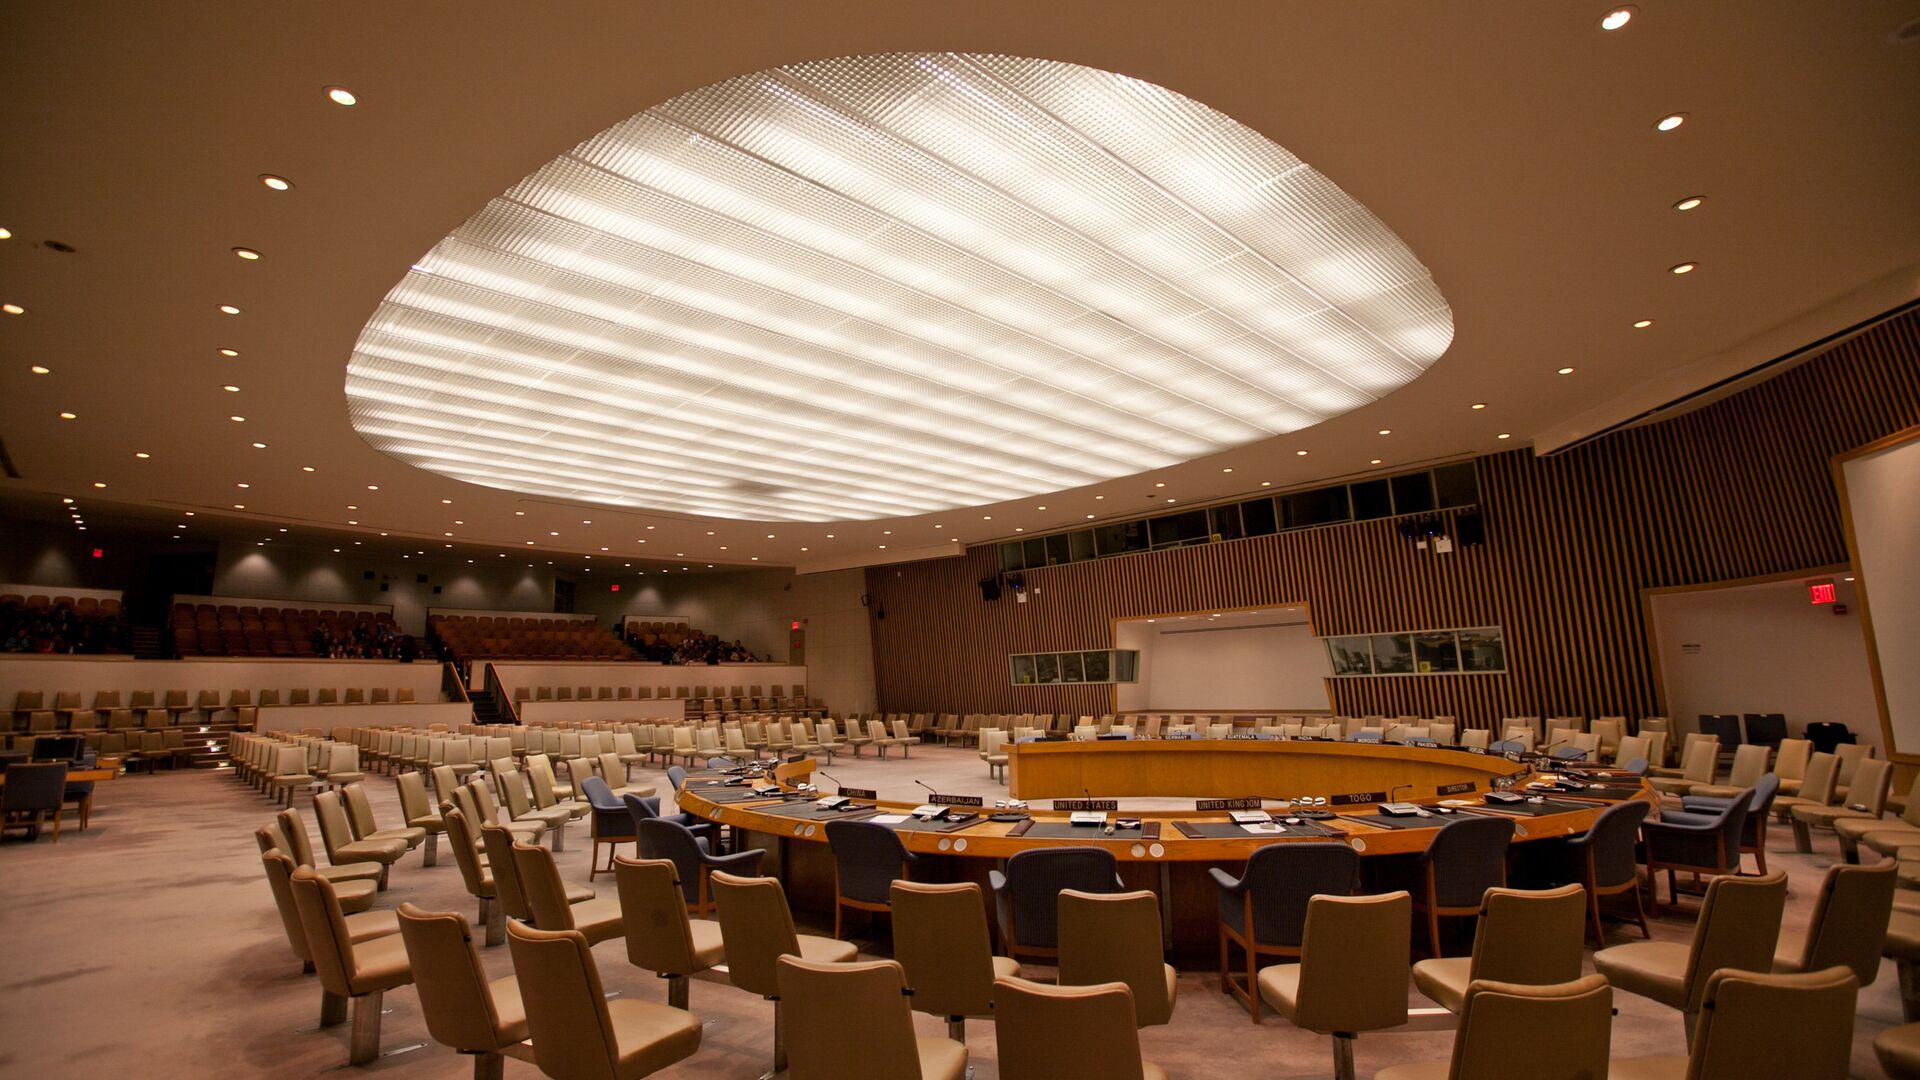 UN Security Council chamber (File photo). - Sputnik International, 1920, 09.09.2021